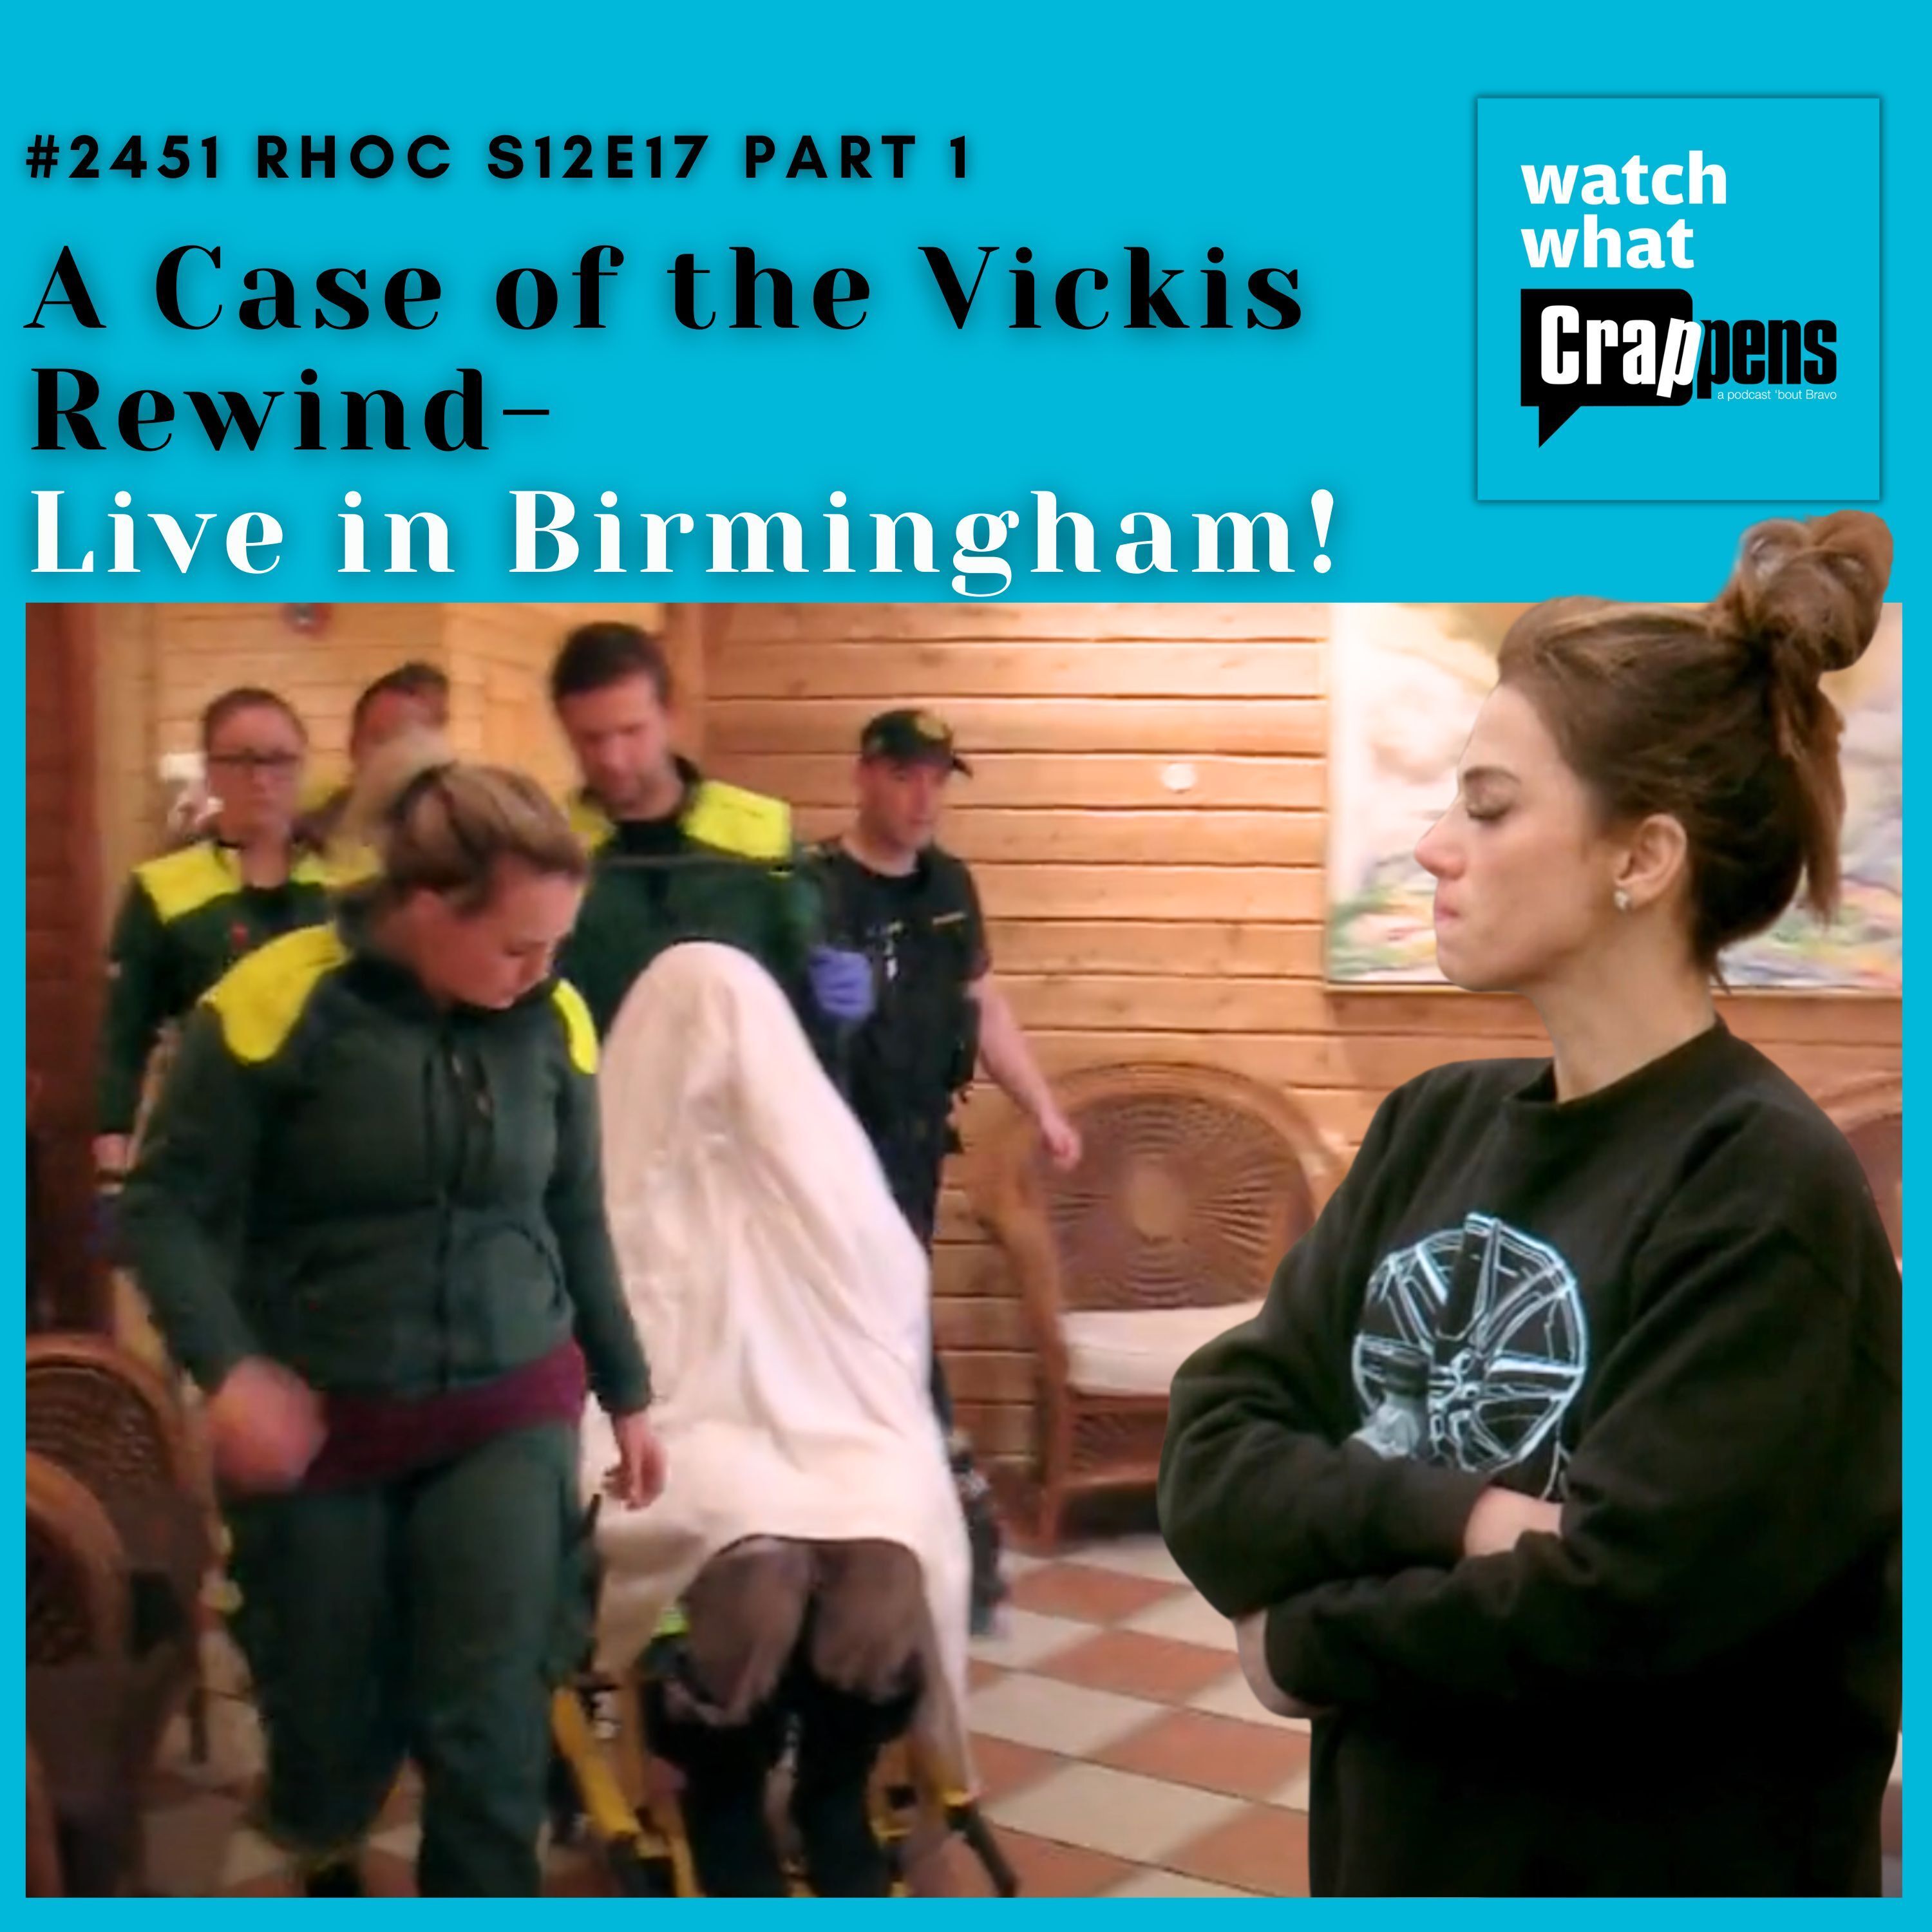 #2451 RHOC Rewind S12E17 Part 1 “A Case of the Vickis” Live in Birmingham!